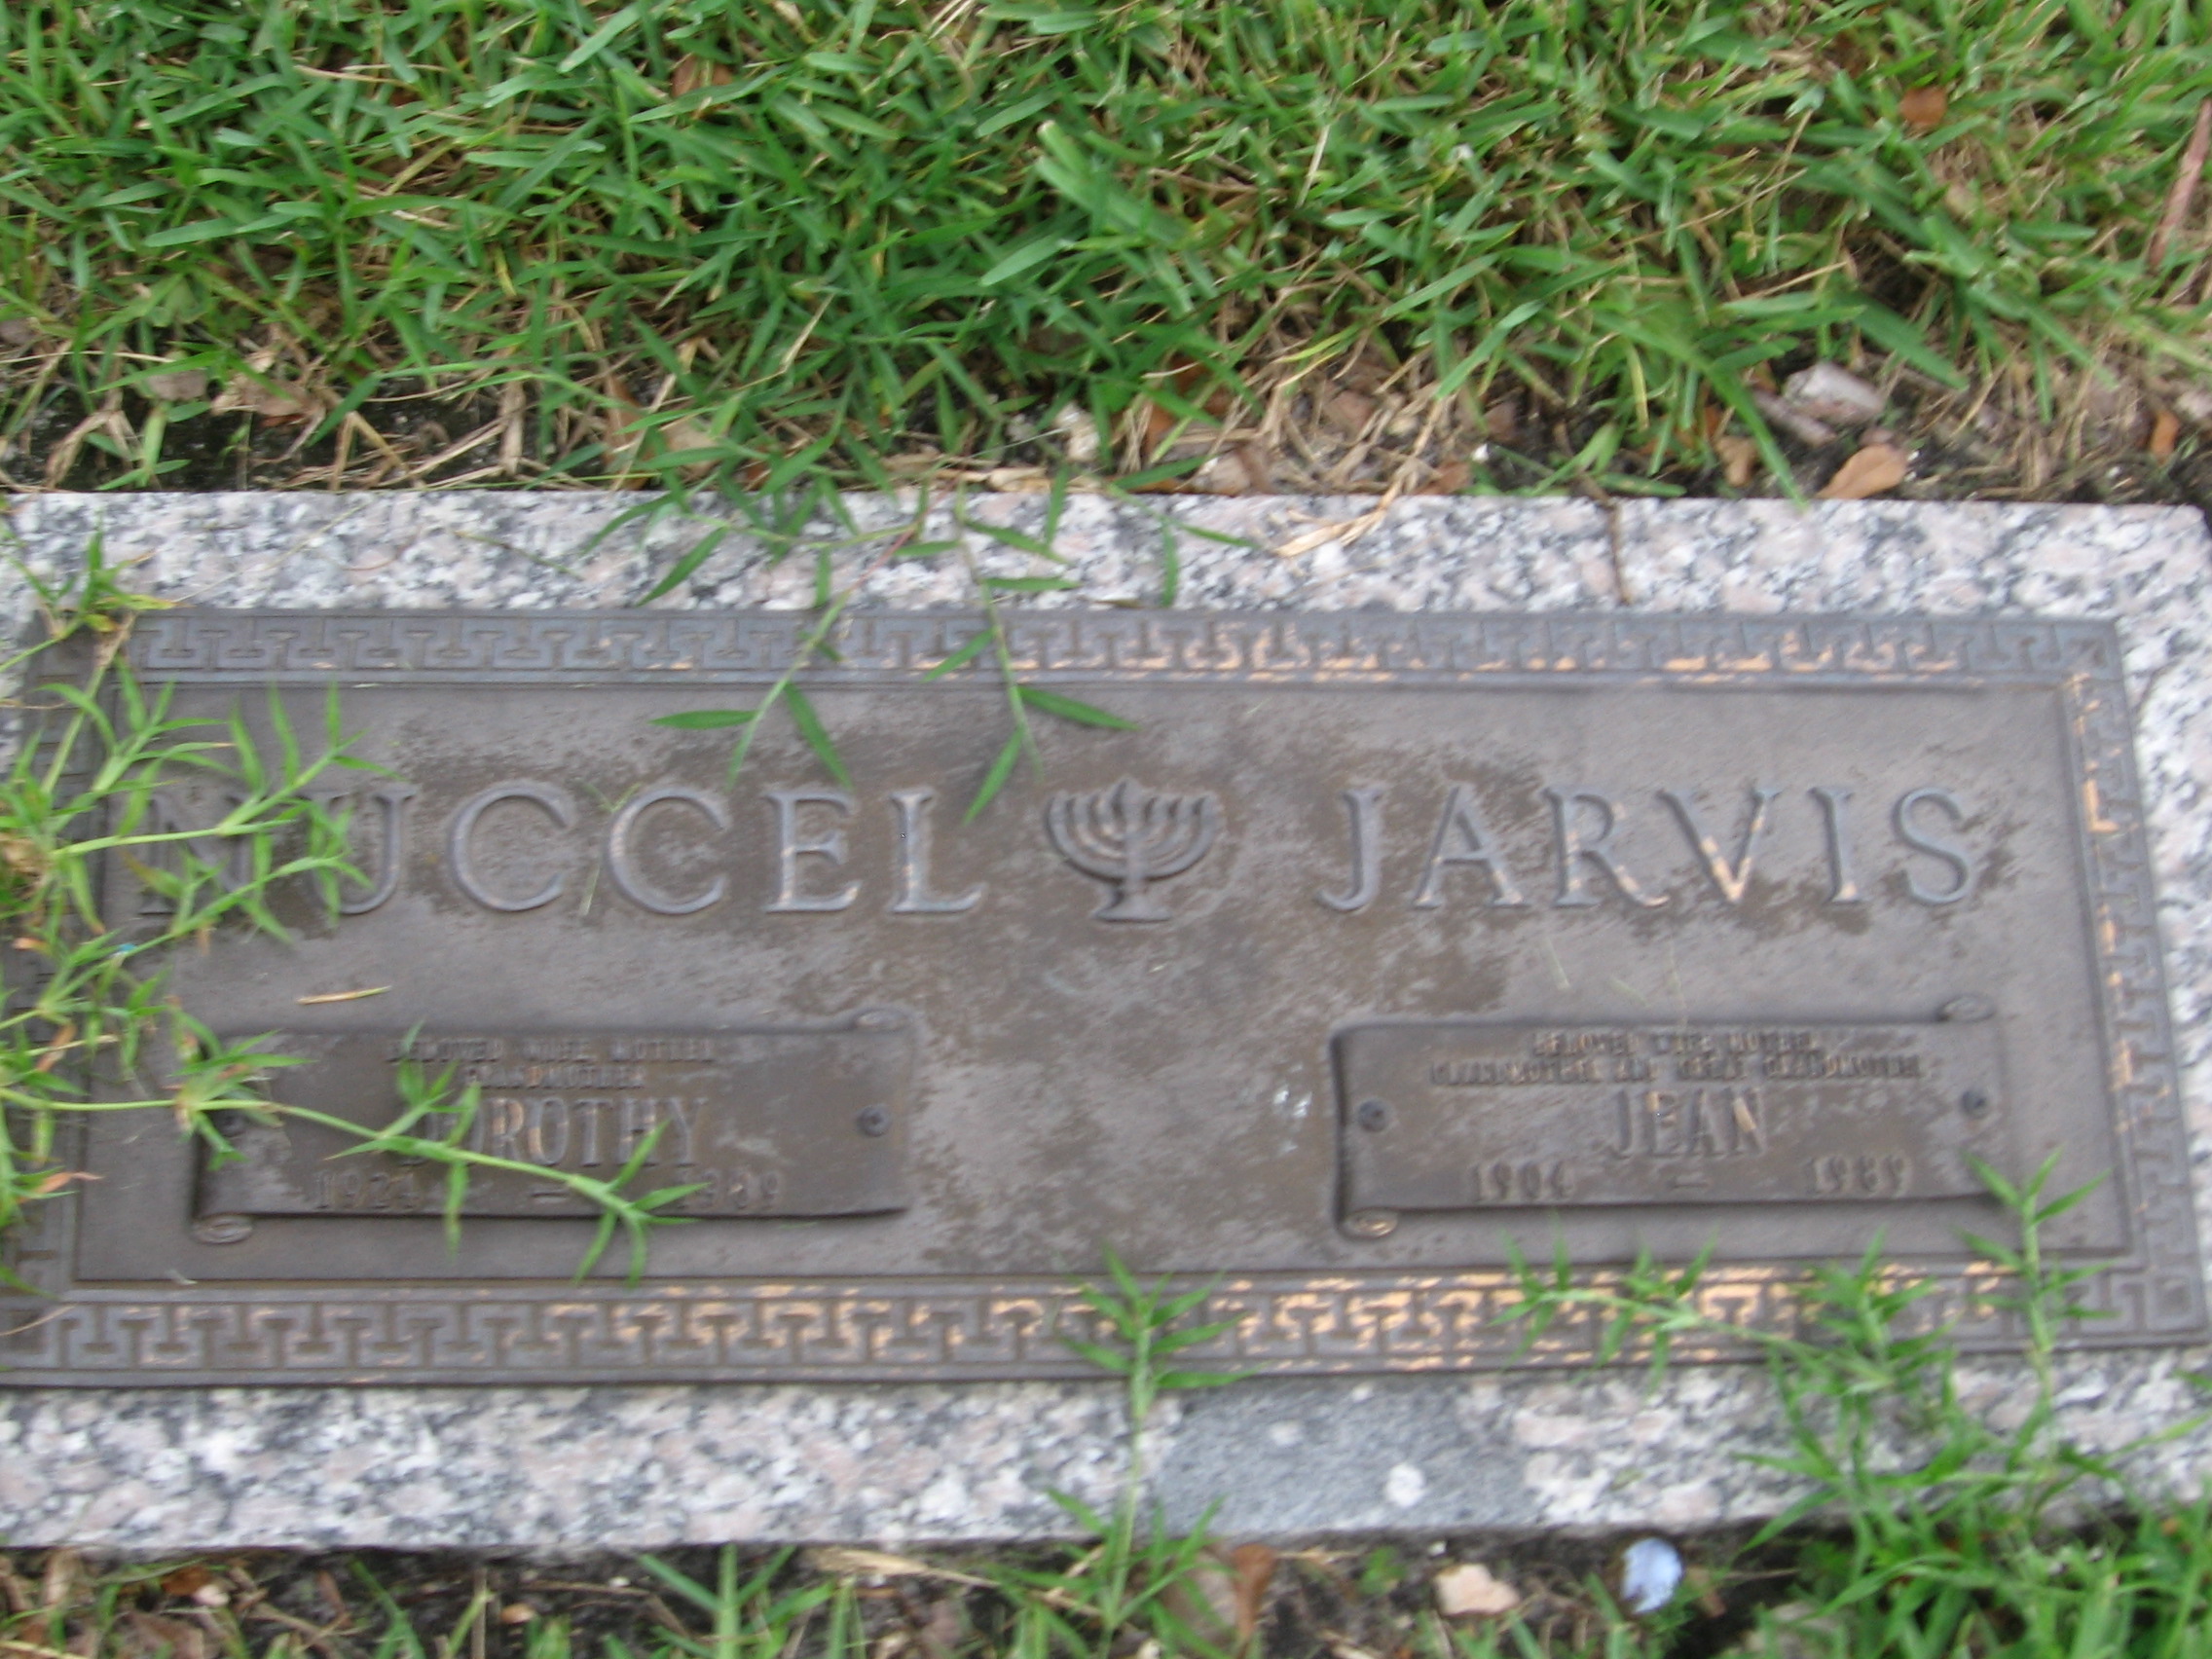 Jean Jarvis